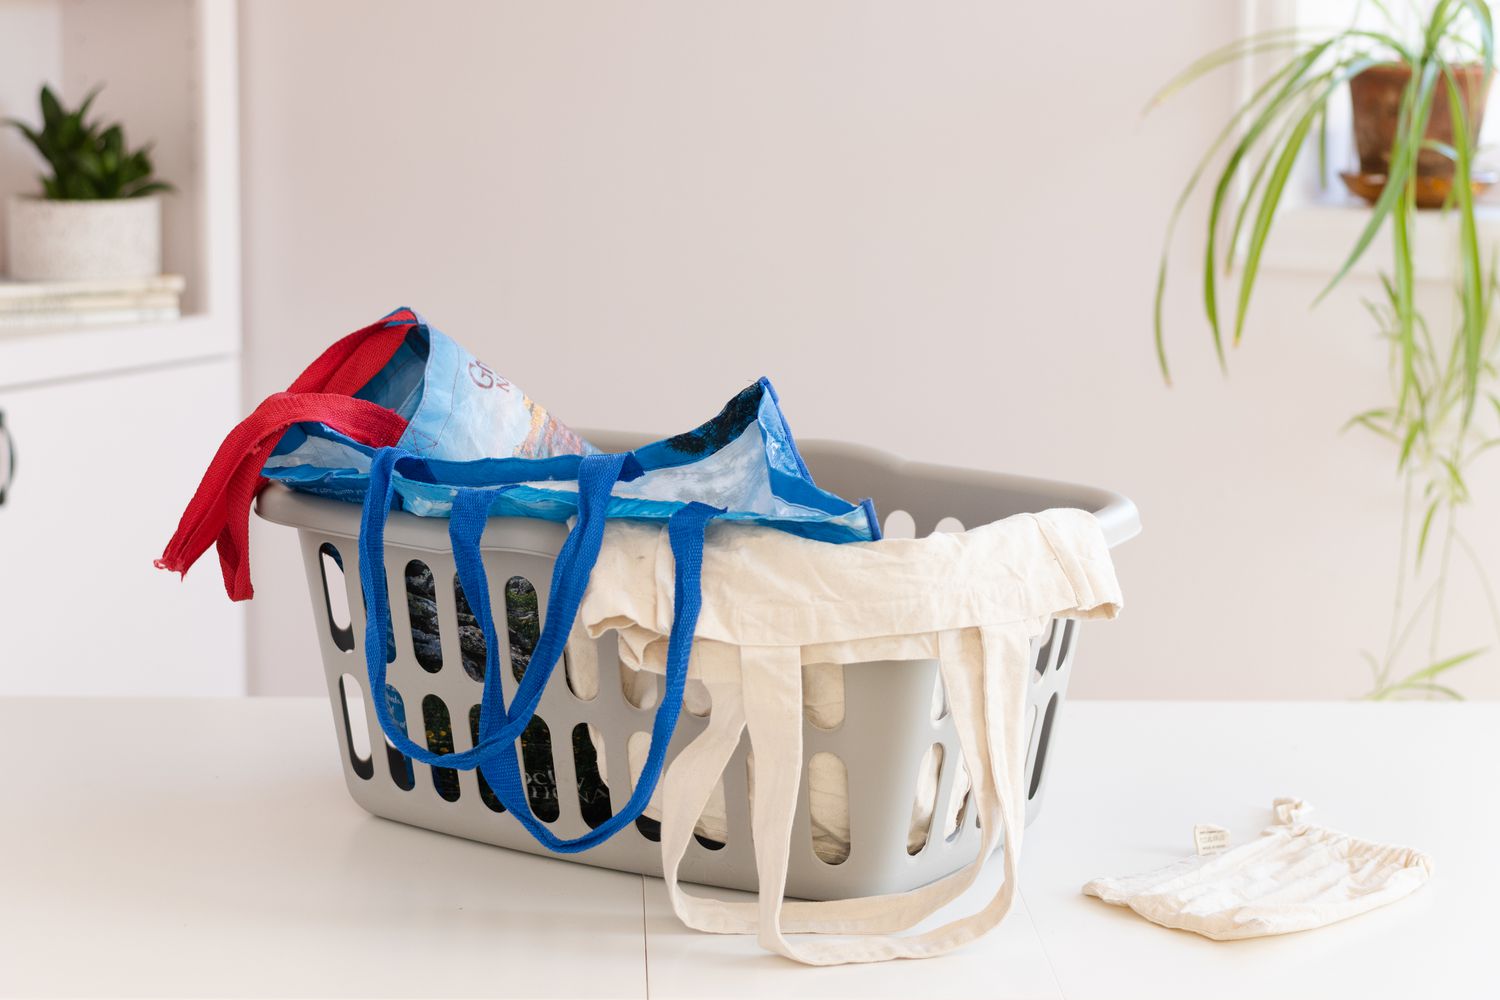 Reusable bags inside laundry basket